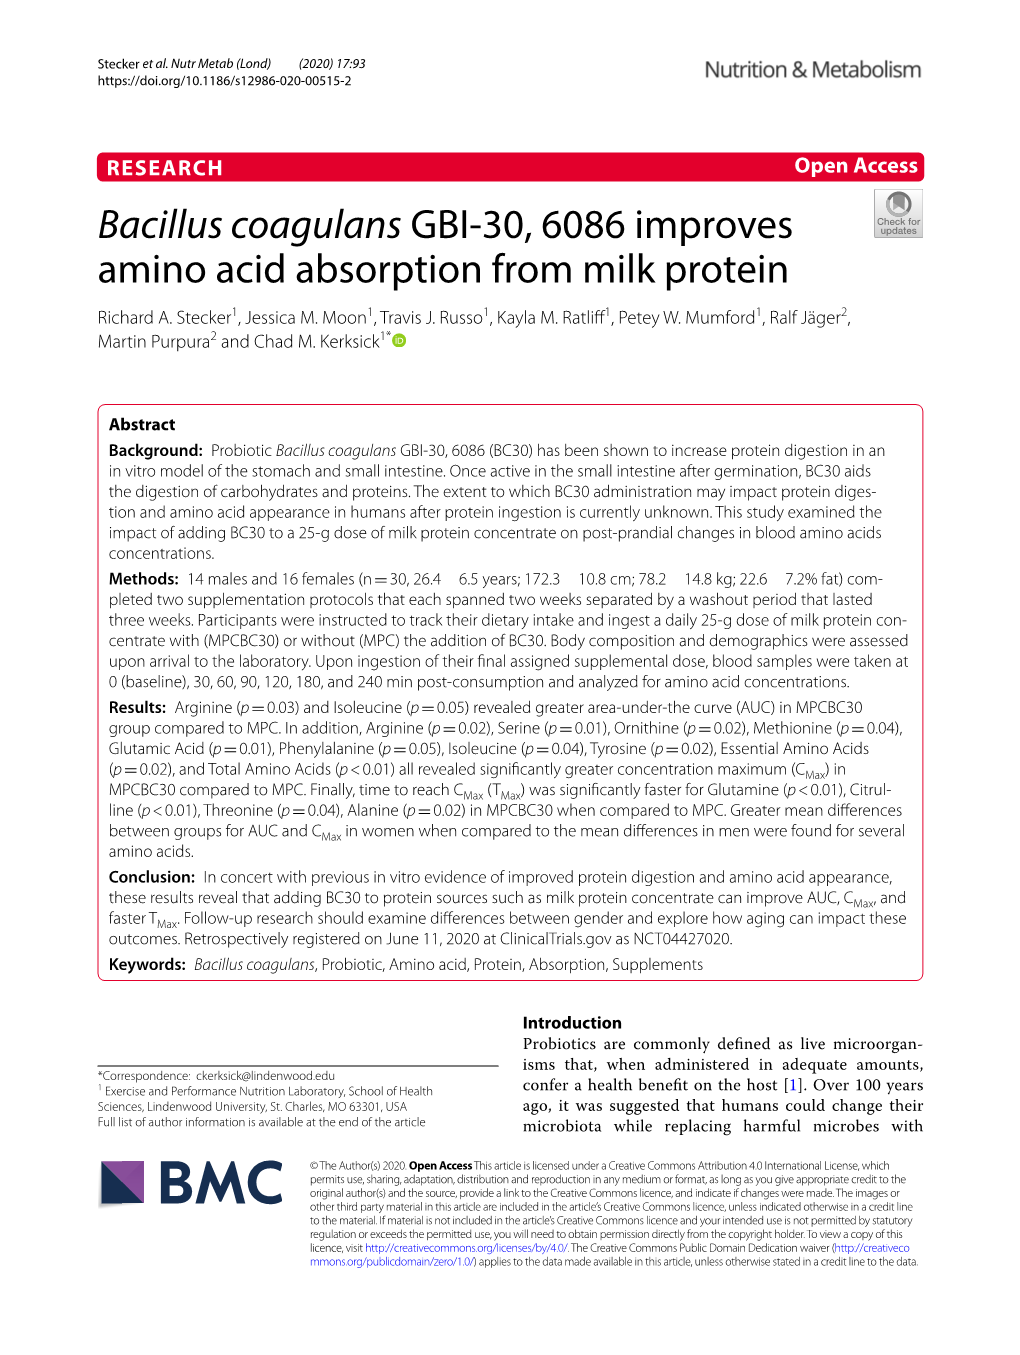 Bacillus Coagulans GBI‑30, 6086 Improves Amino Acid Absorption from Milk Protein Richard A